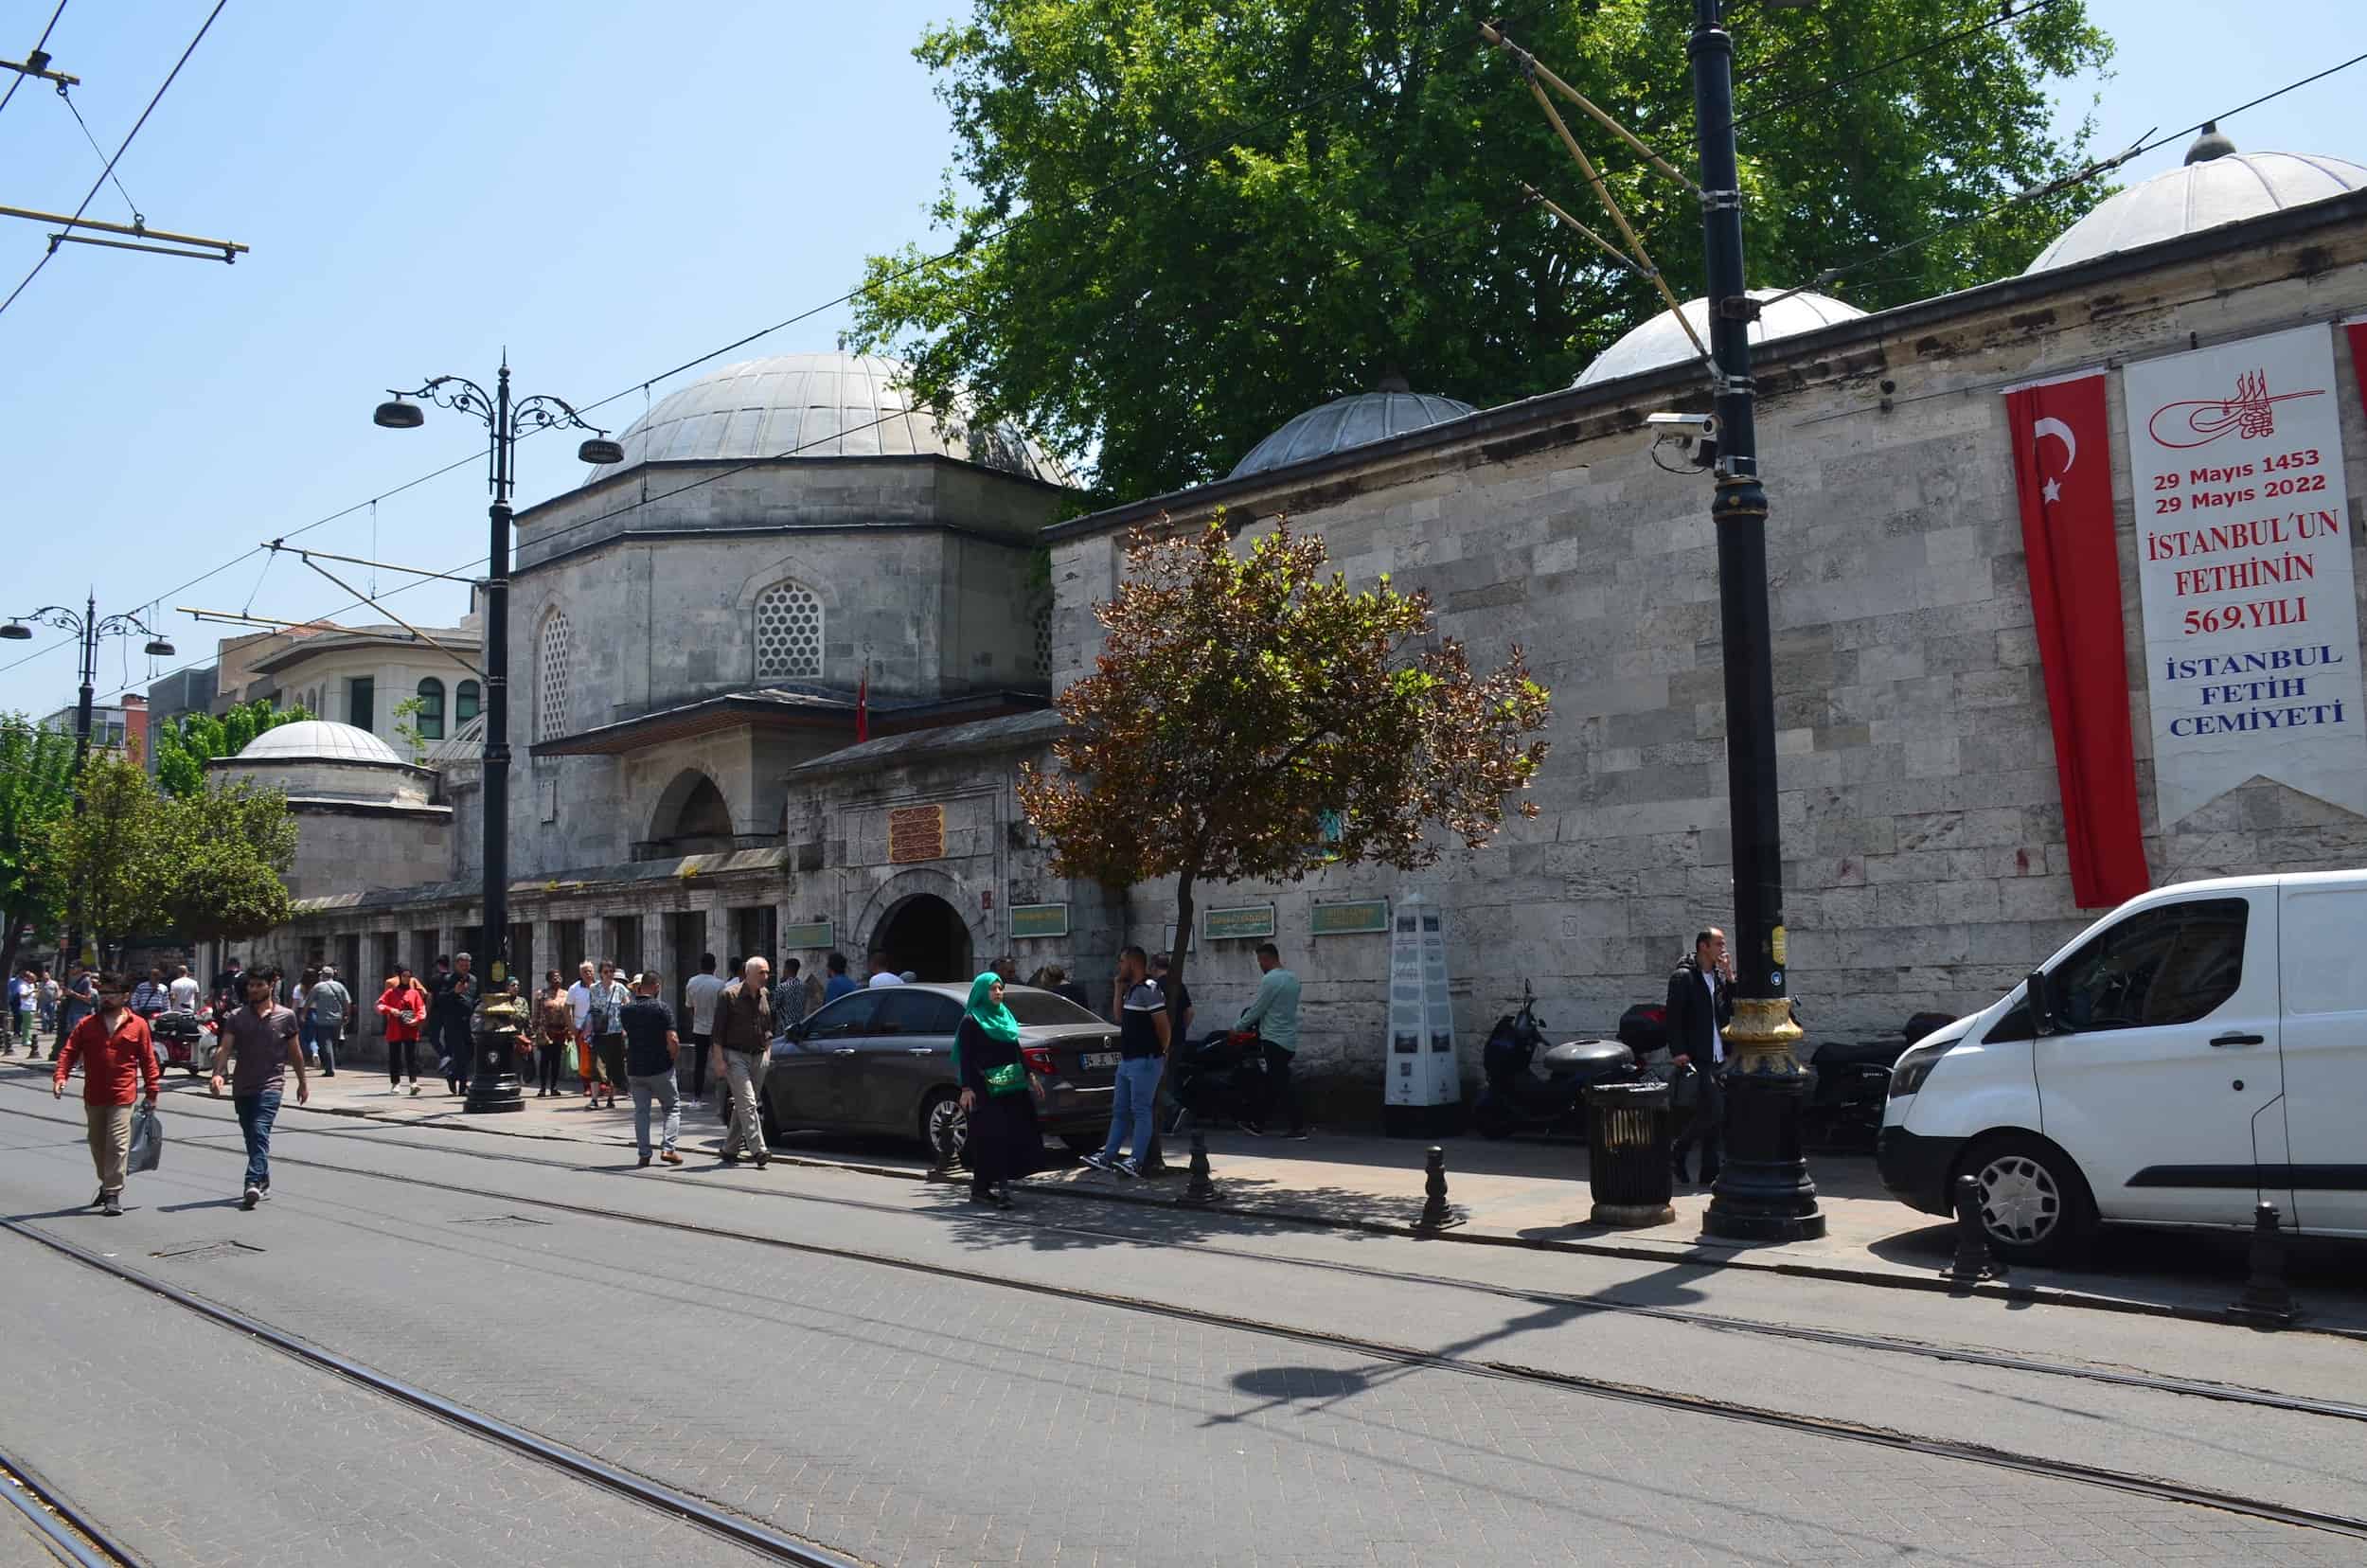 Merzifonlu Kara Mustafa Pasha Madrasa in Beyazıt, Istanbul, Turkey